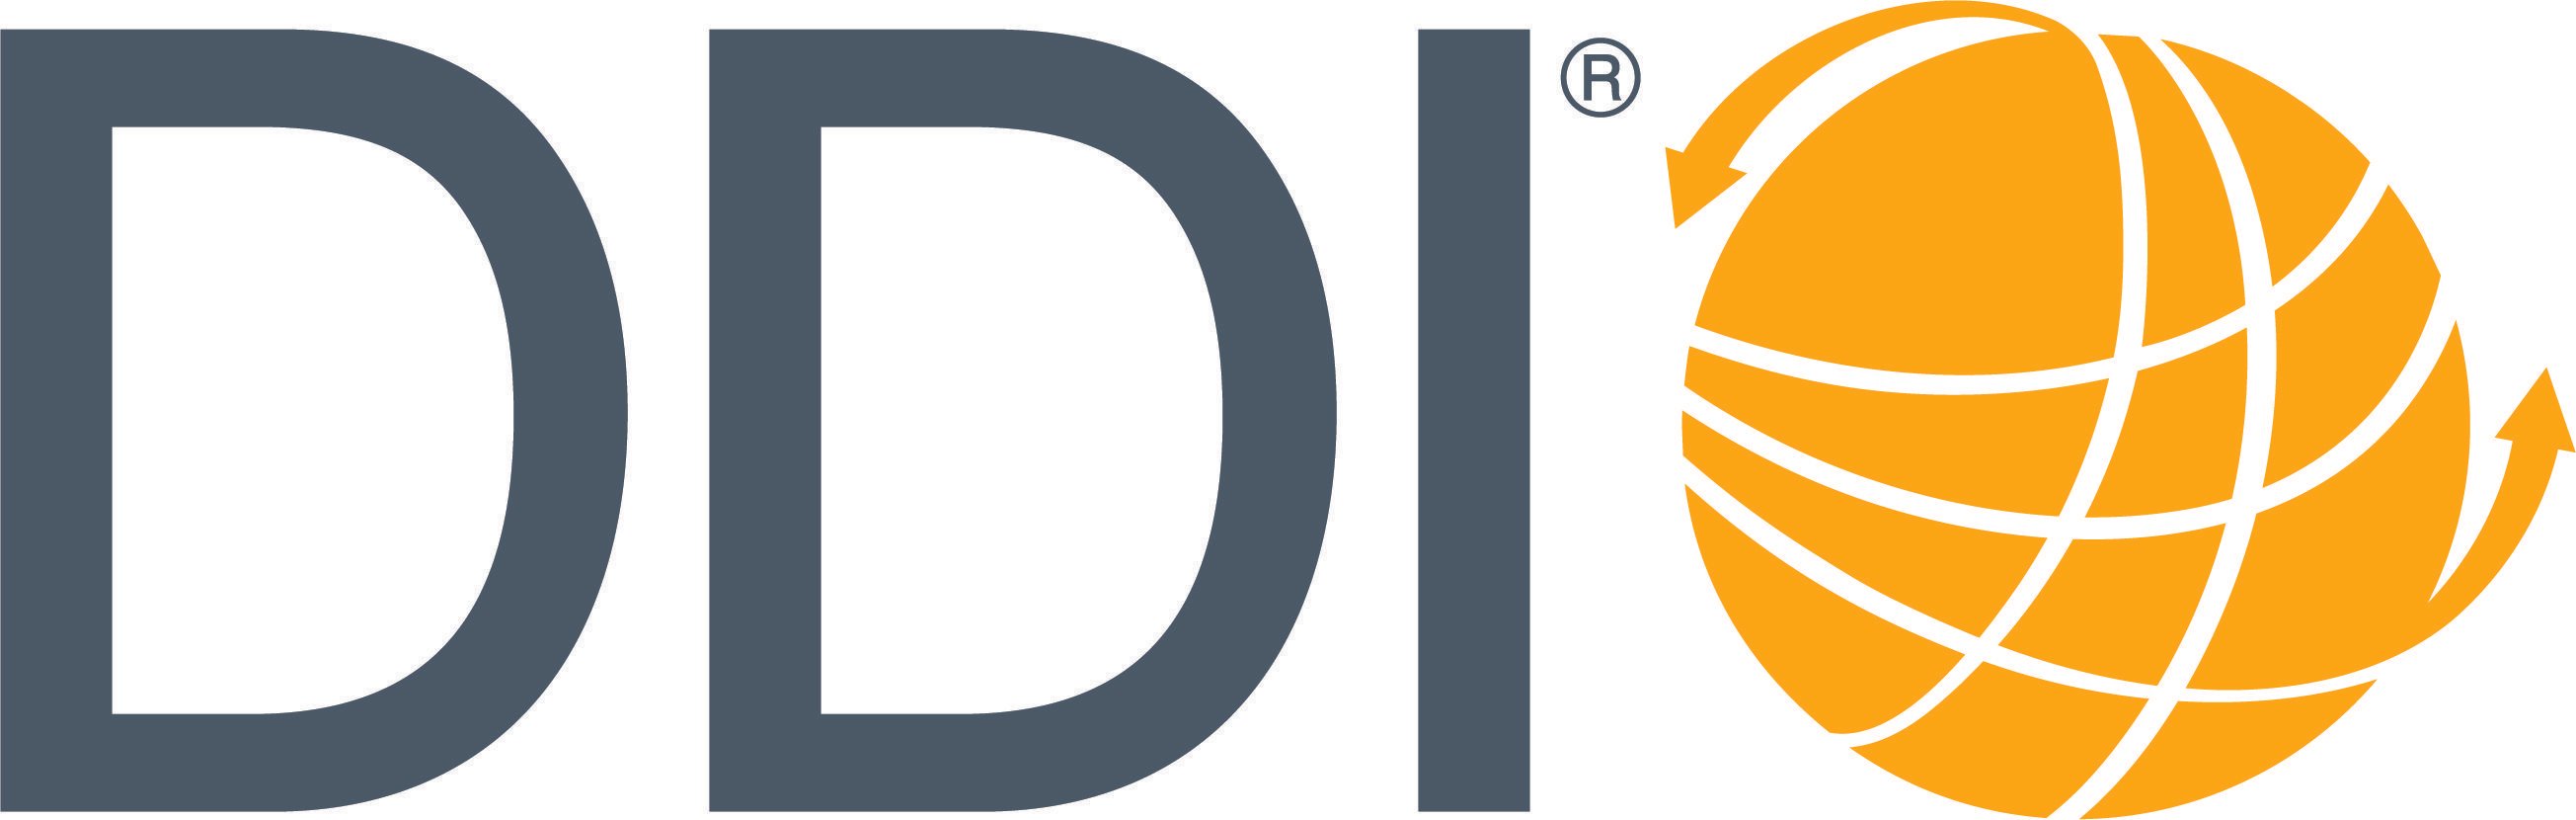 DDI Logo - Global Leadership Forecast 2018 | The Conference Board